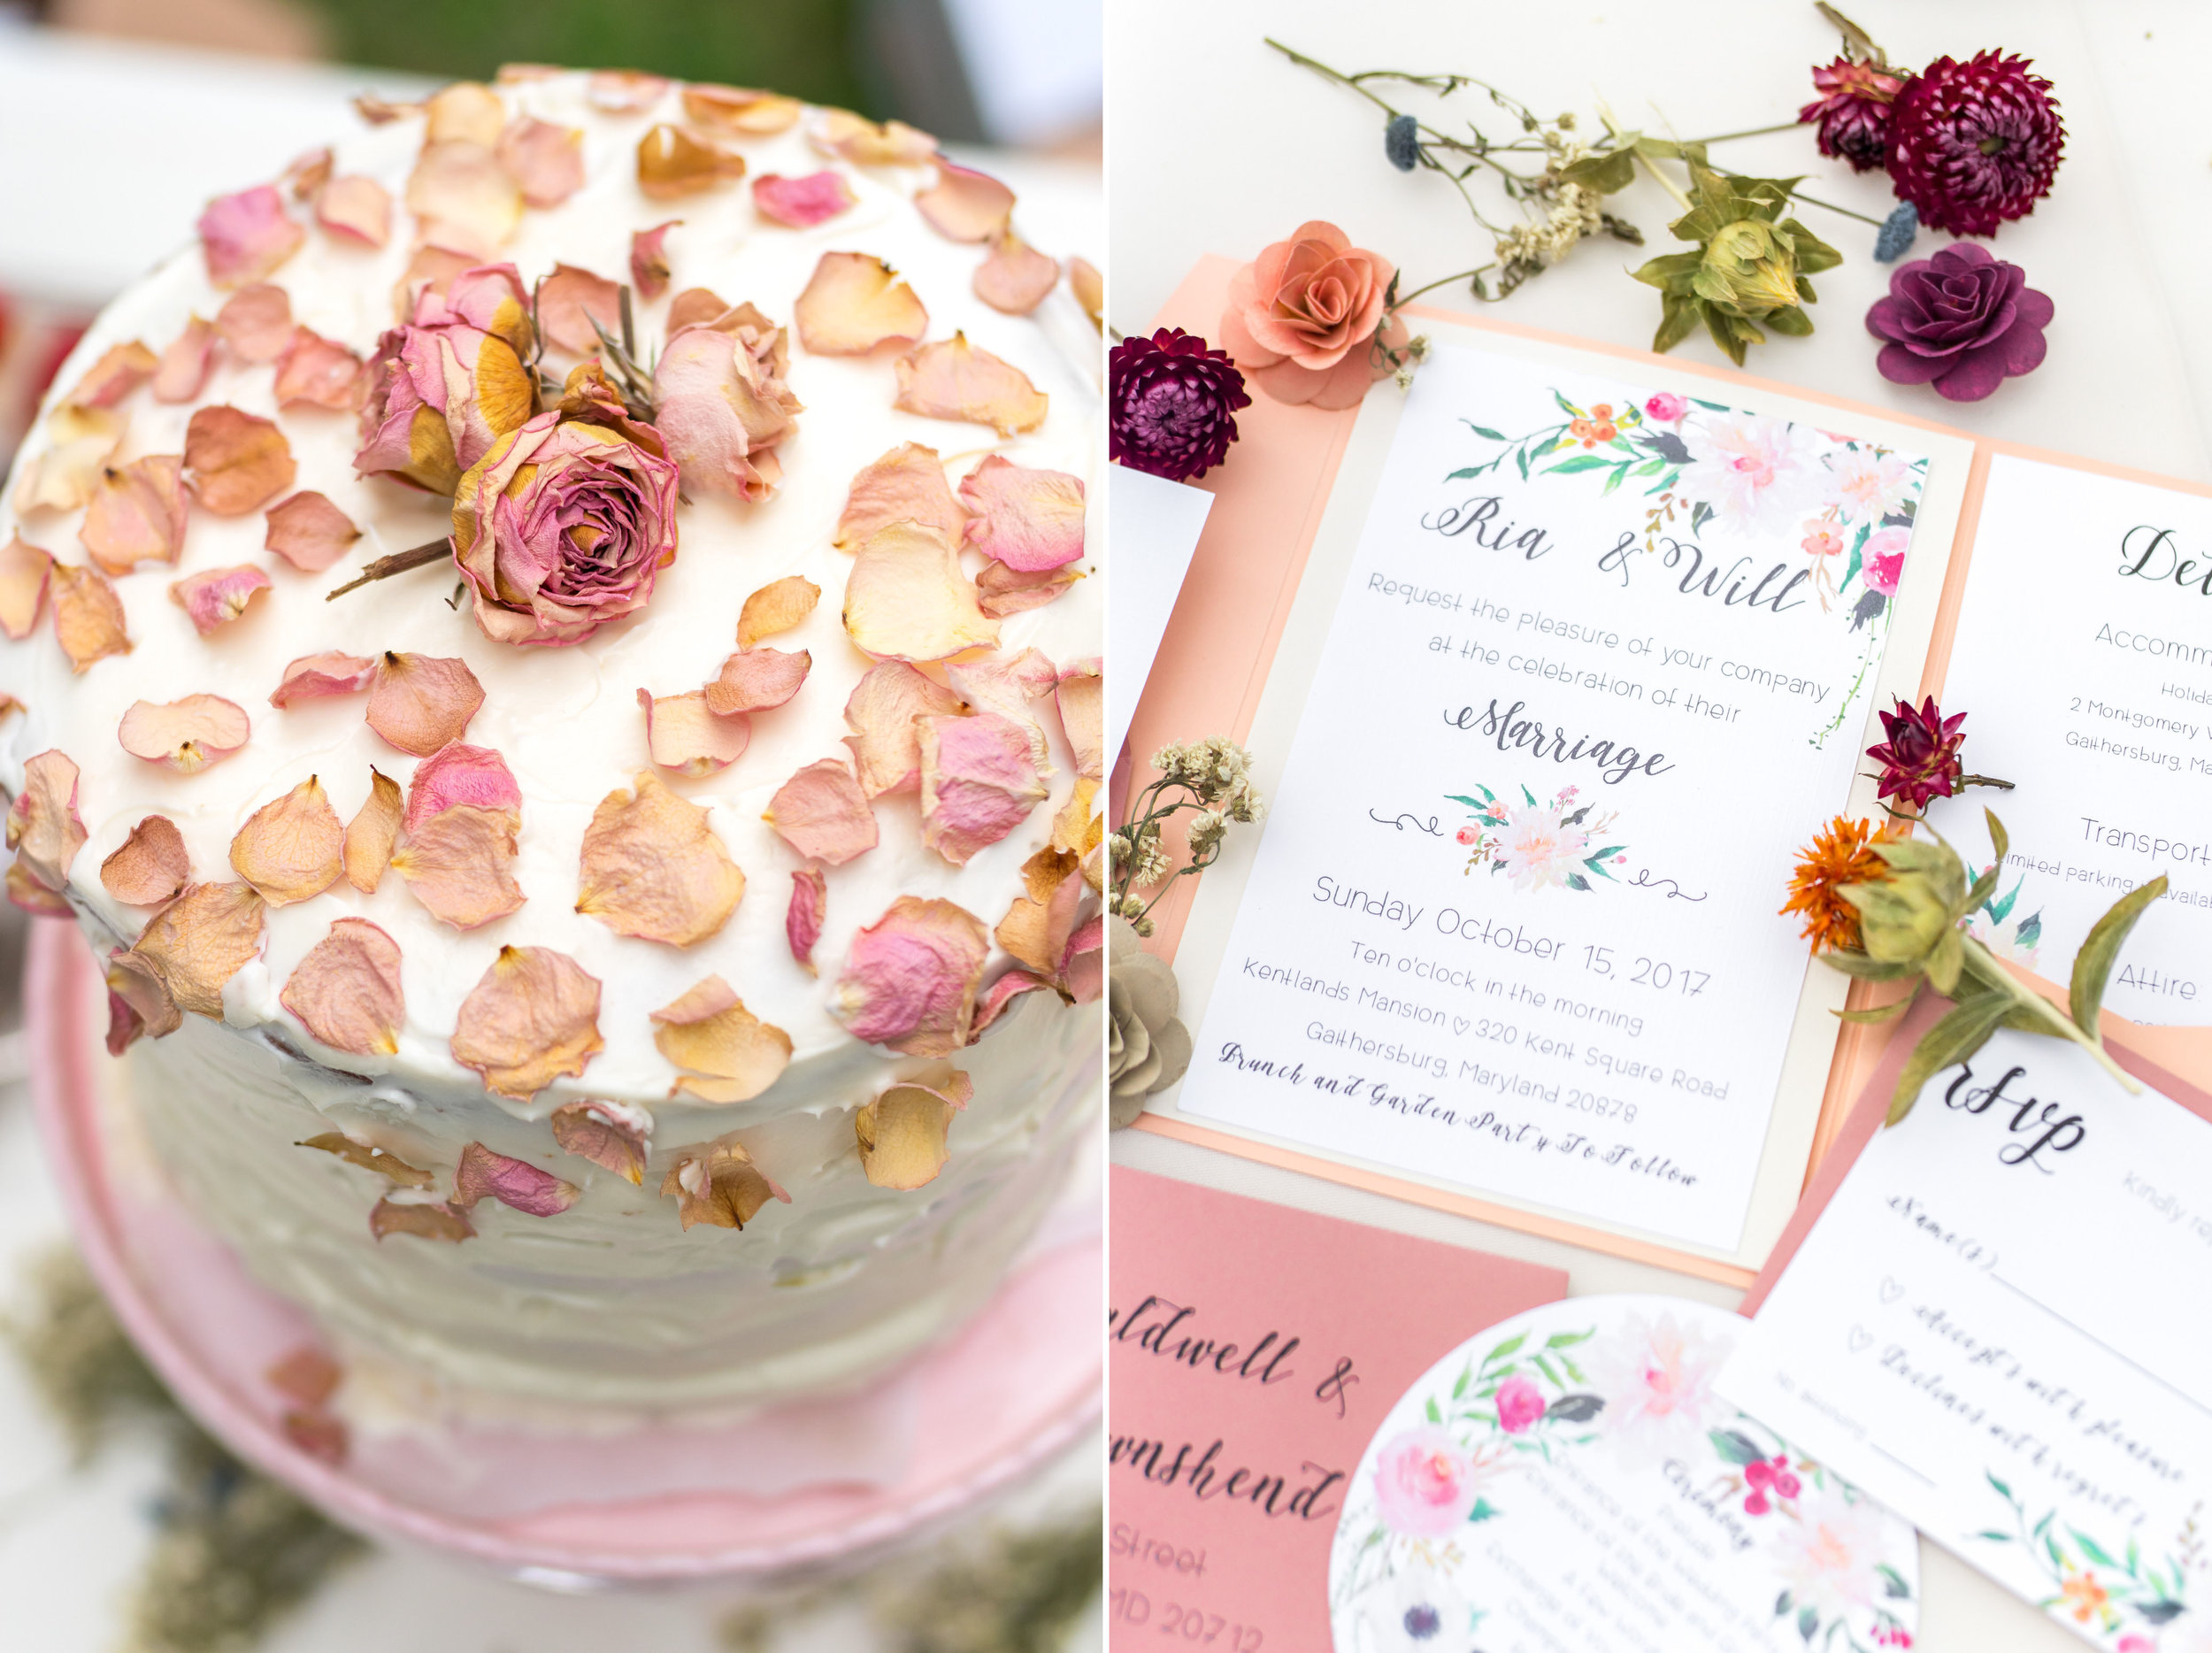 DIY wedding cake and invitations photography